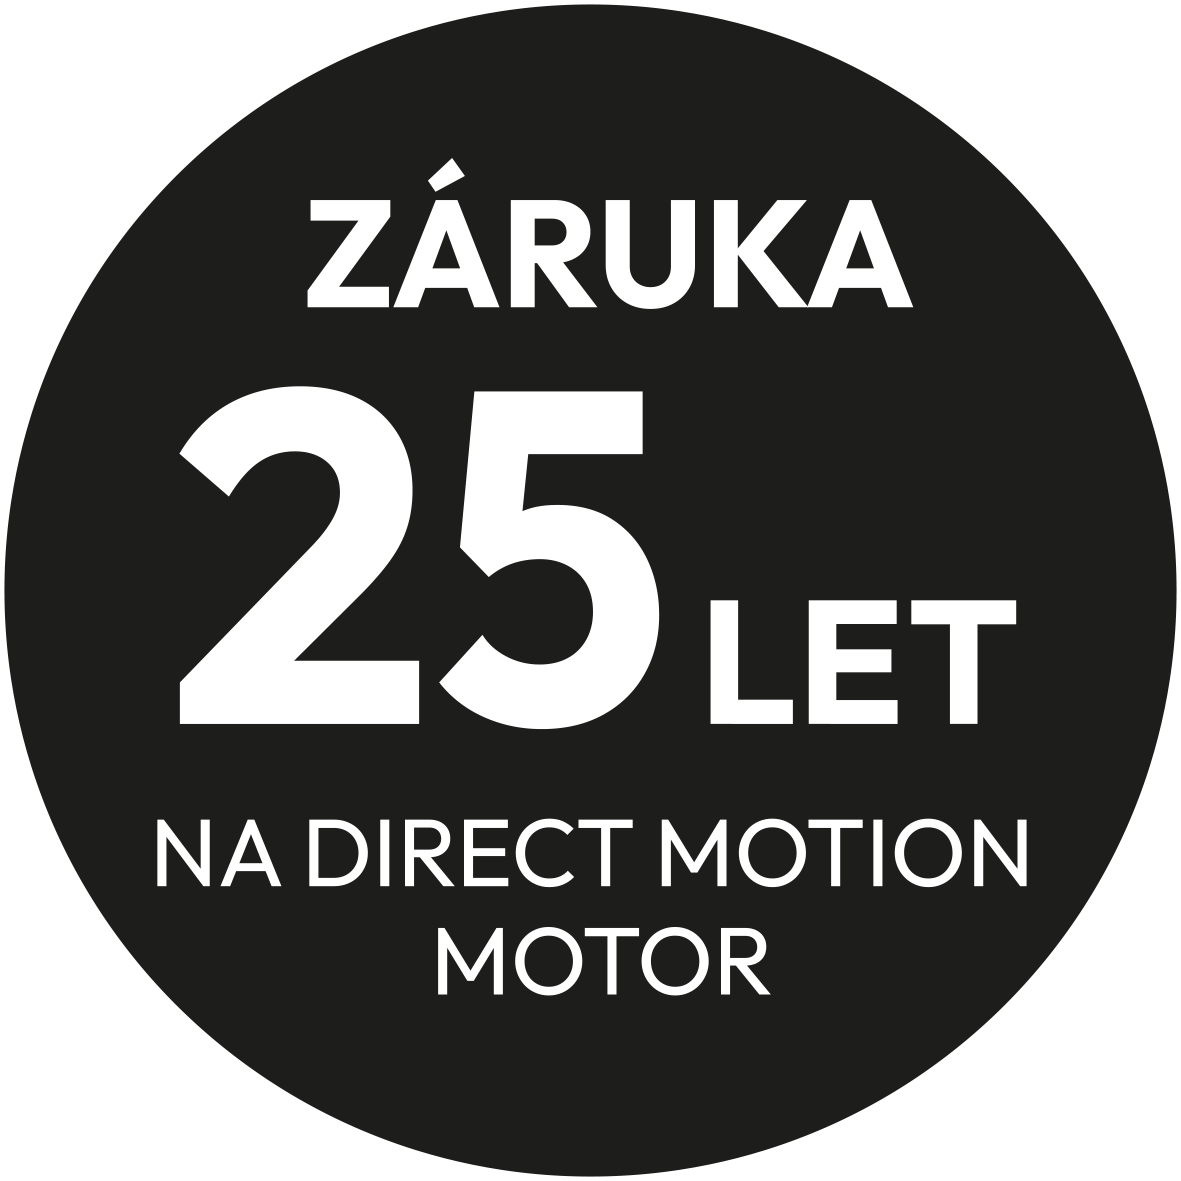 haier-zaruka-25-let-direct-motio